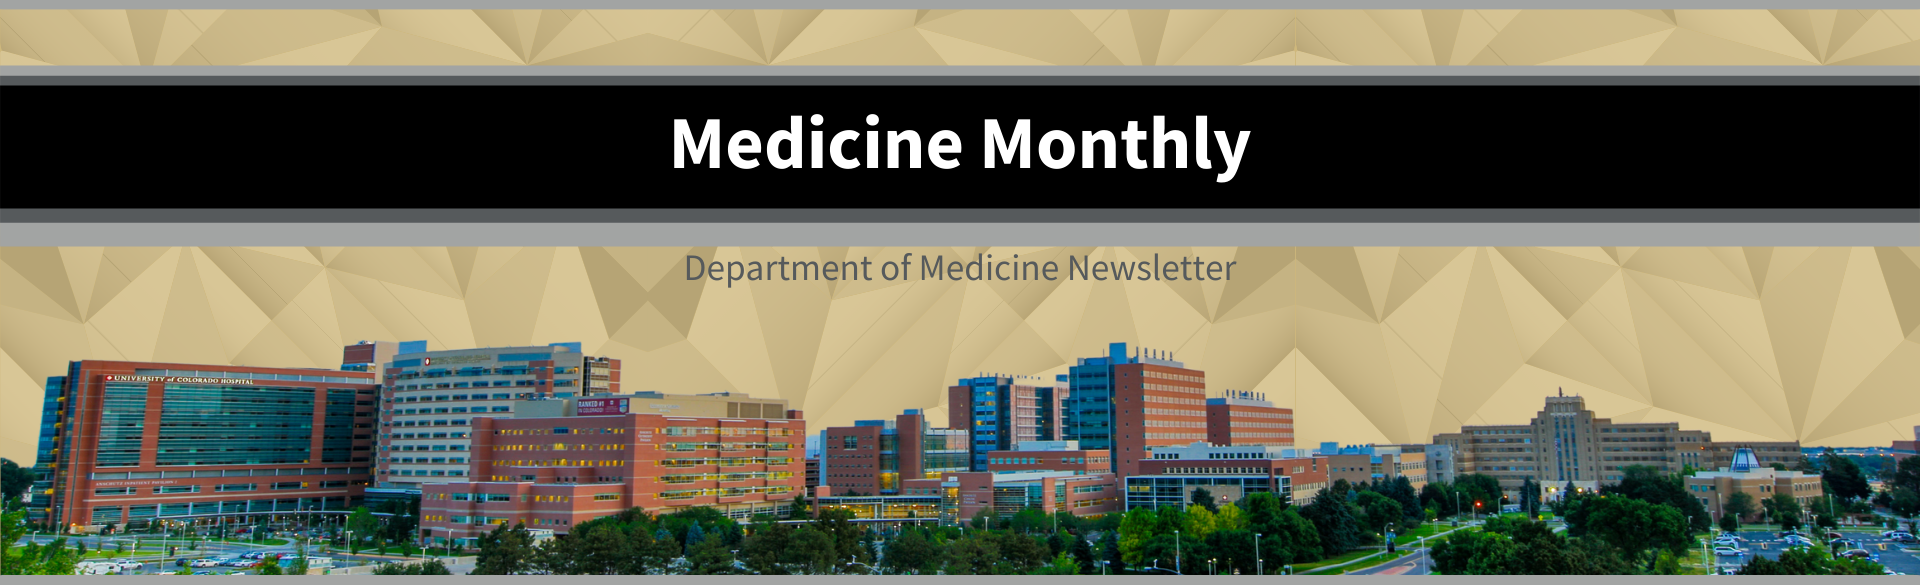 Medicine Monthly